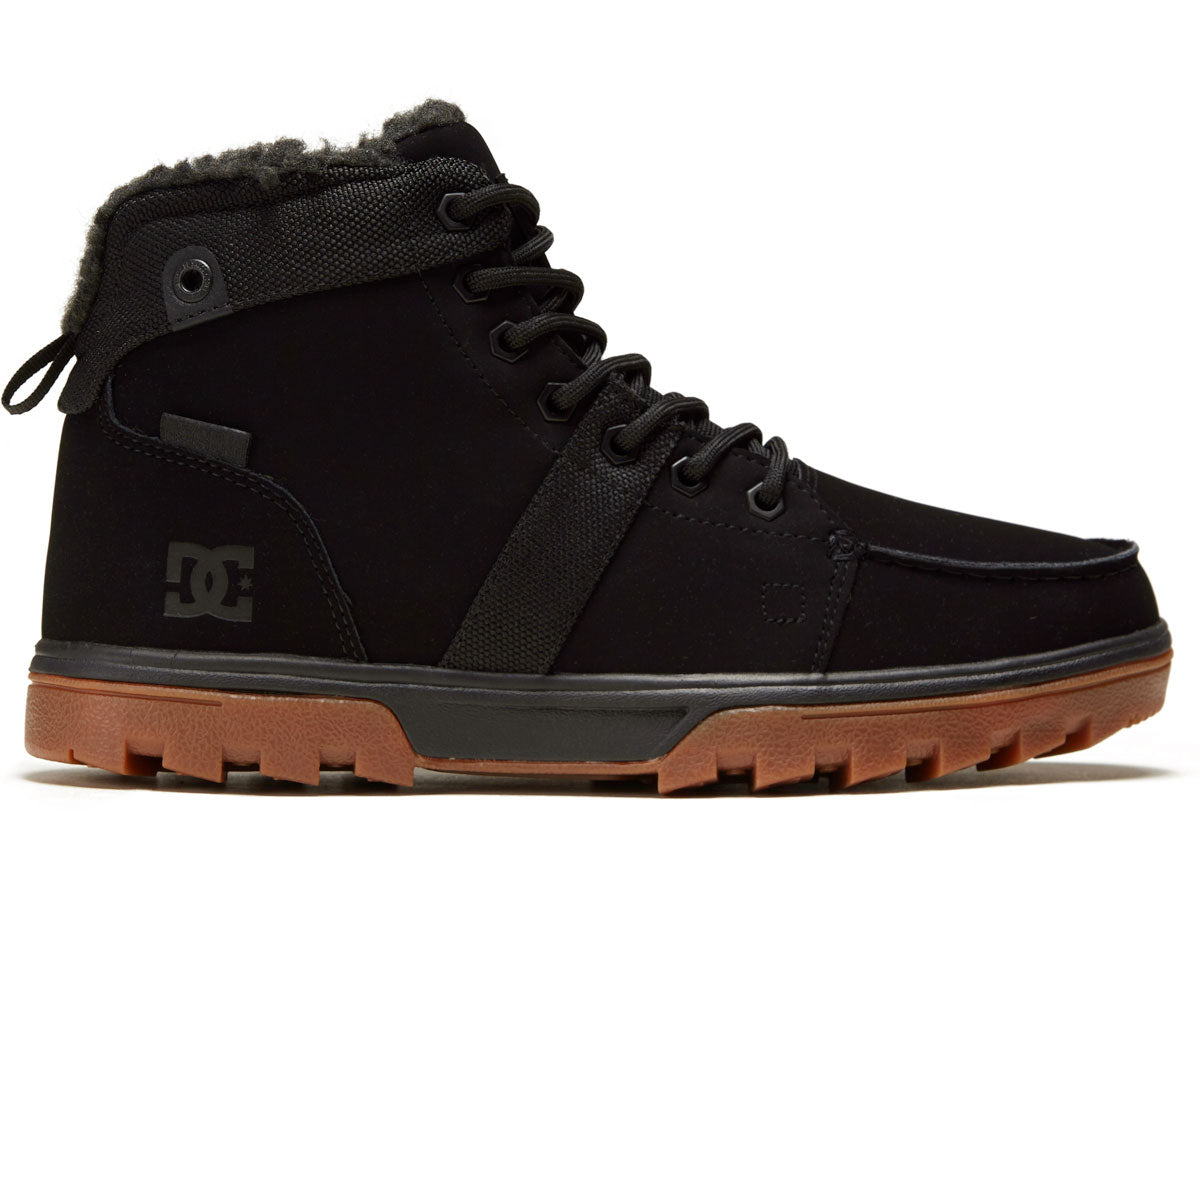 DC Woodland Winter Boots - Black/Gum image 1